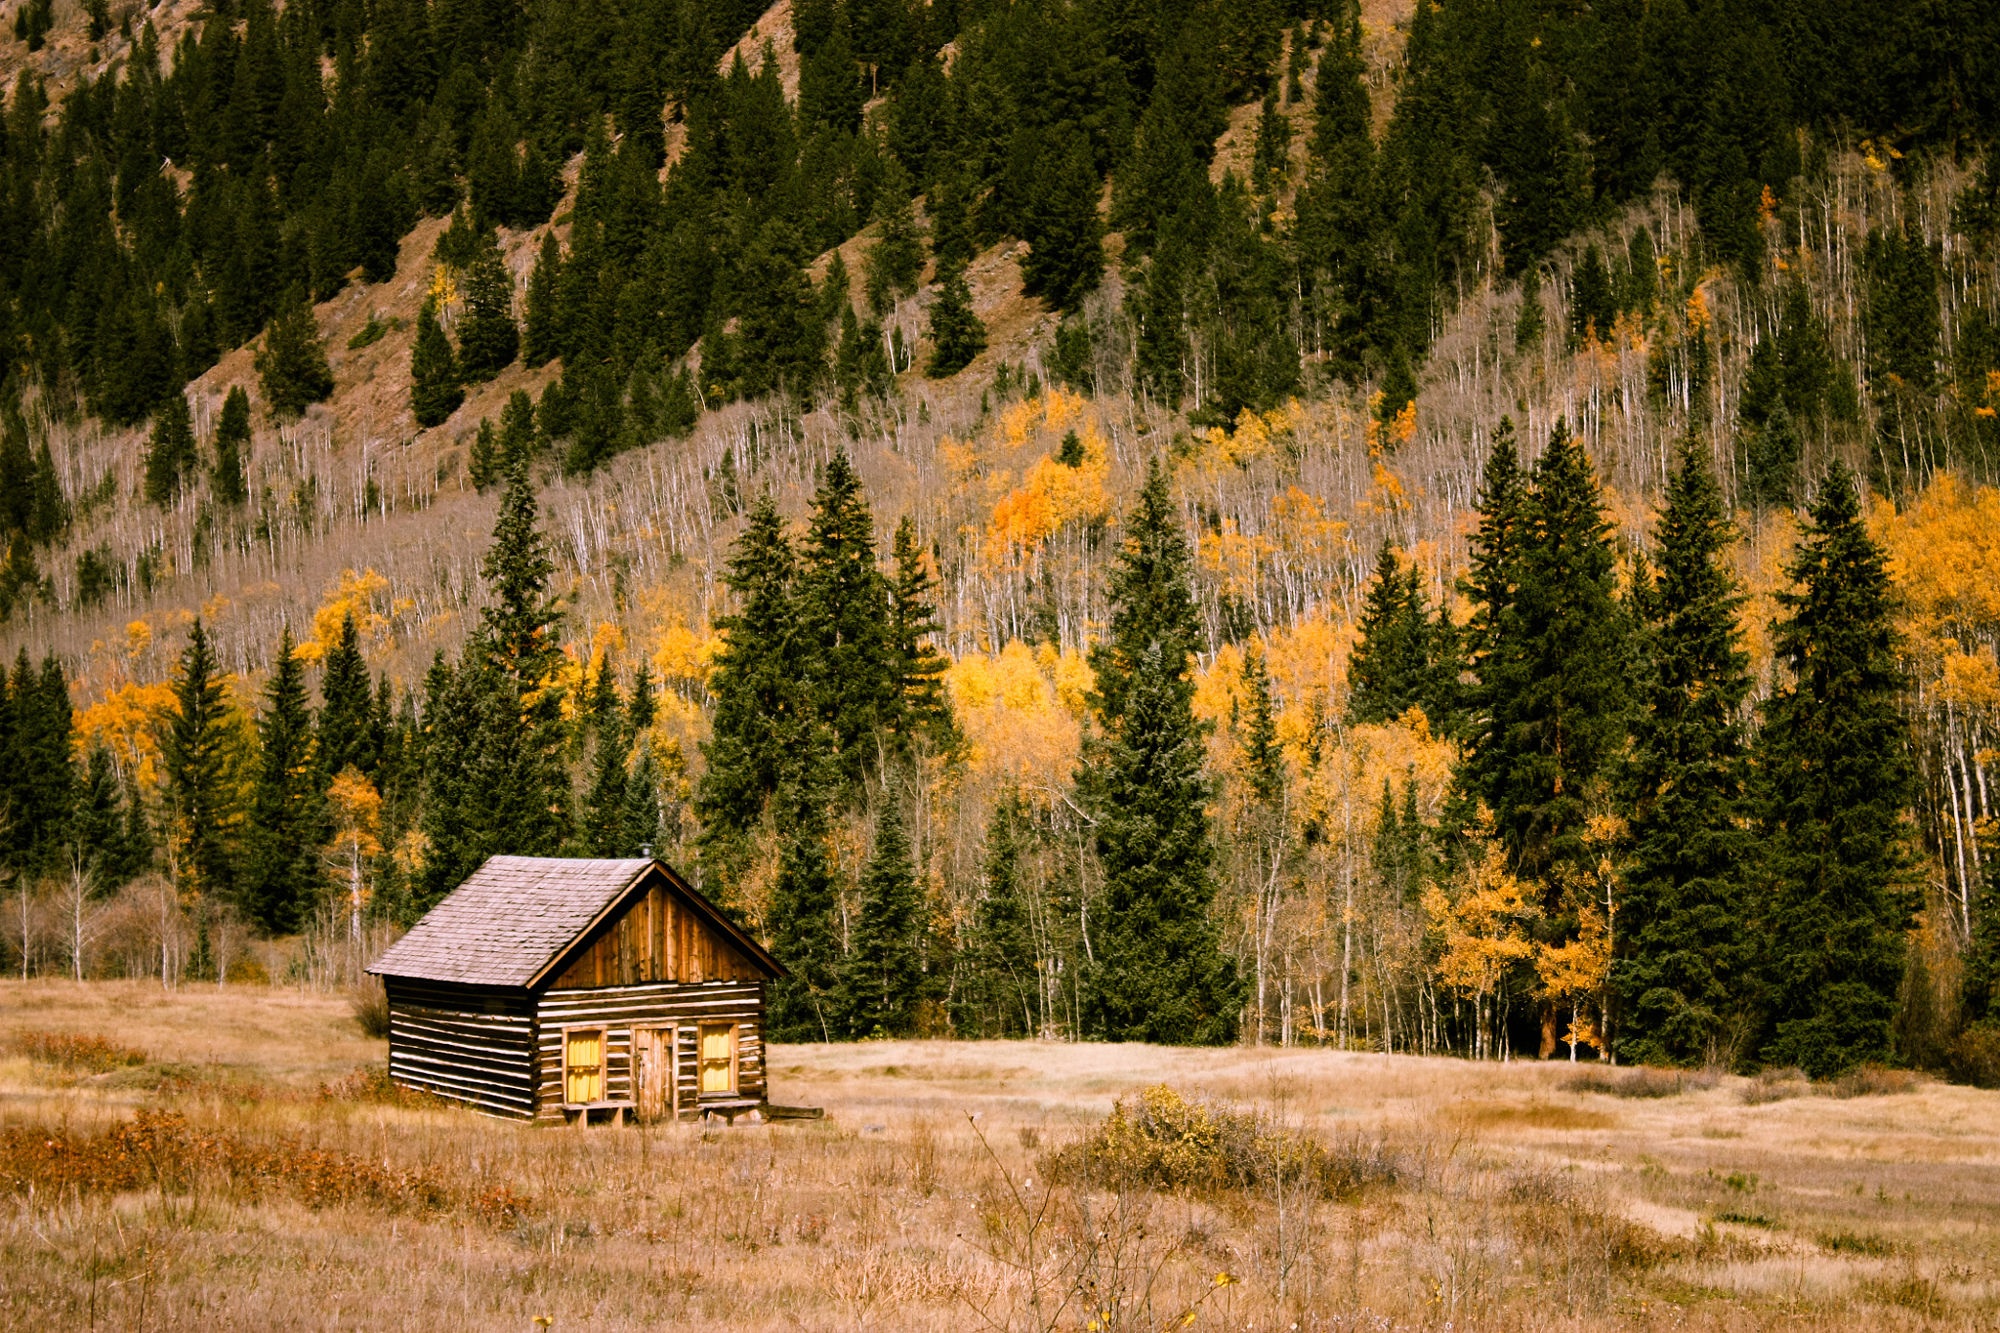 The cabin photo